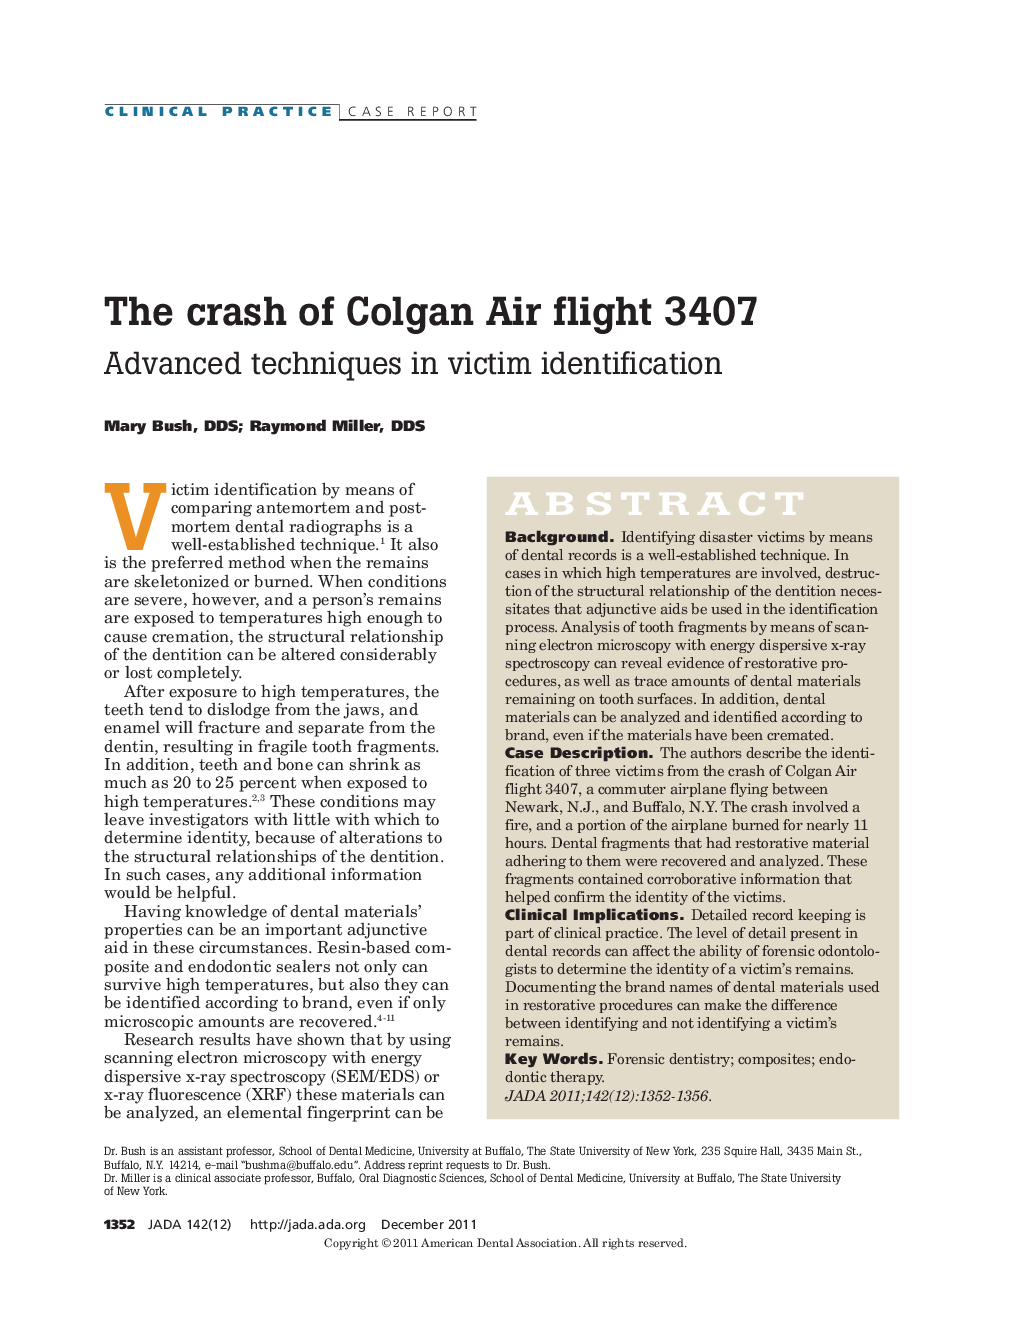 The crash of Colgan Air flight 3407 : Advanced techniques in victim identification